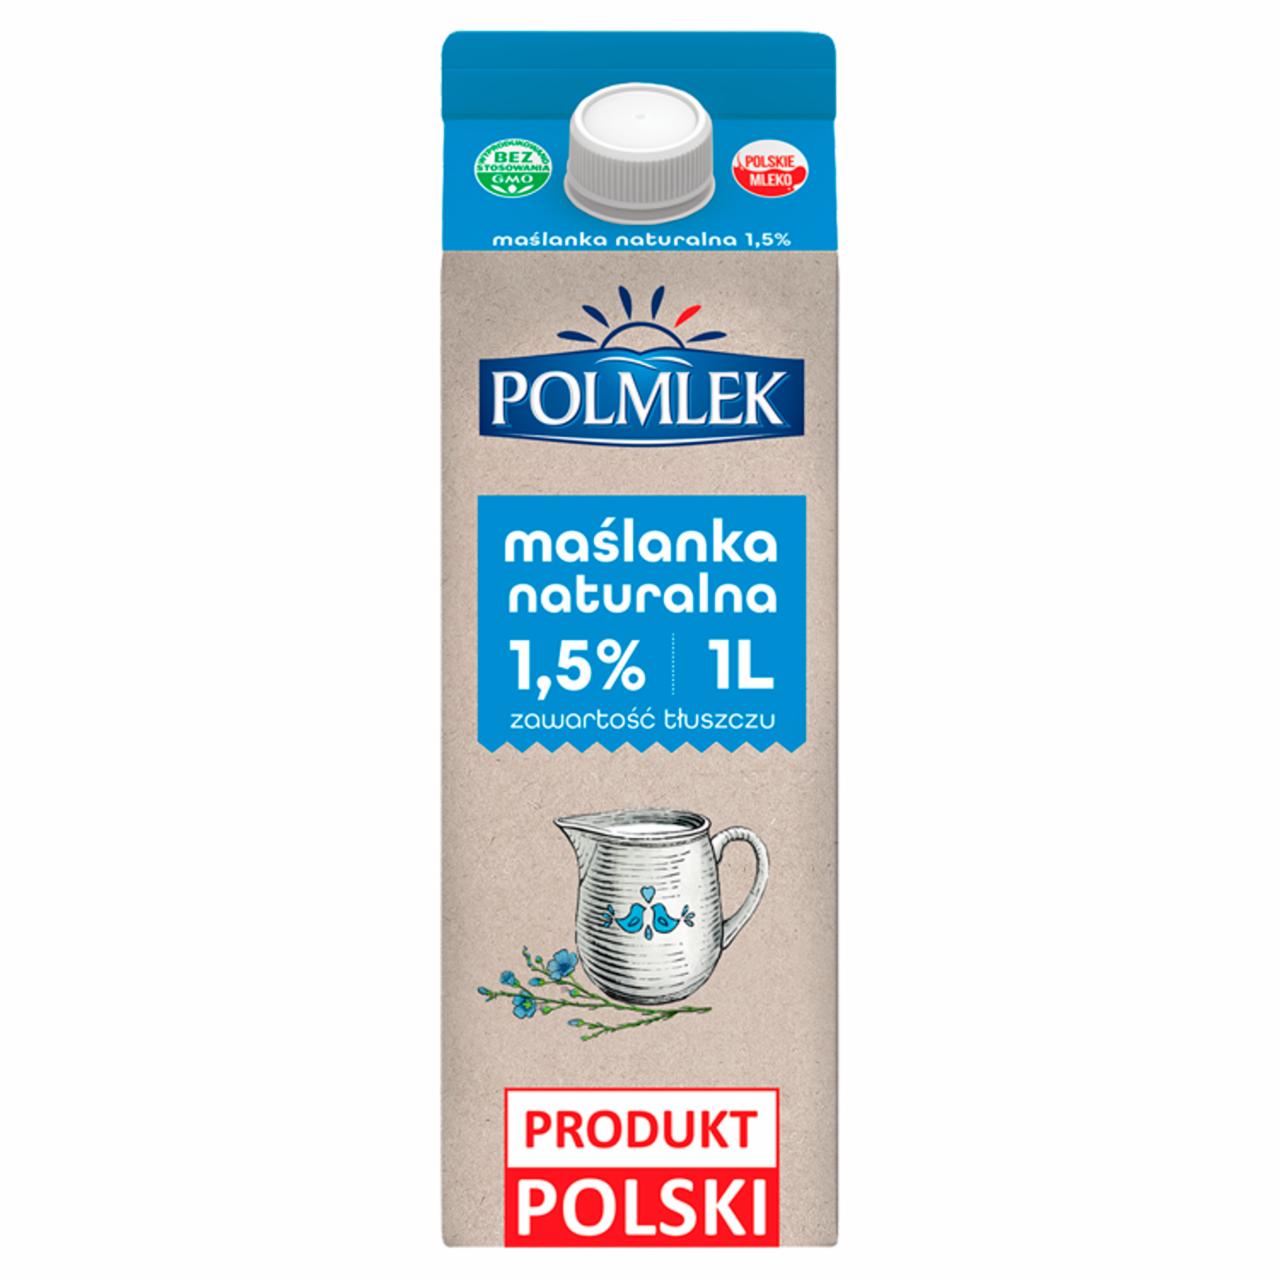 Photo - Polmlek Natural Buttermilk 1.5% 1 L